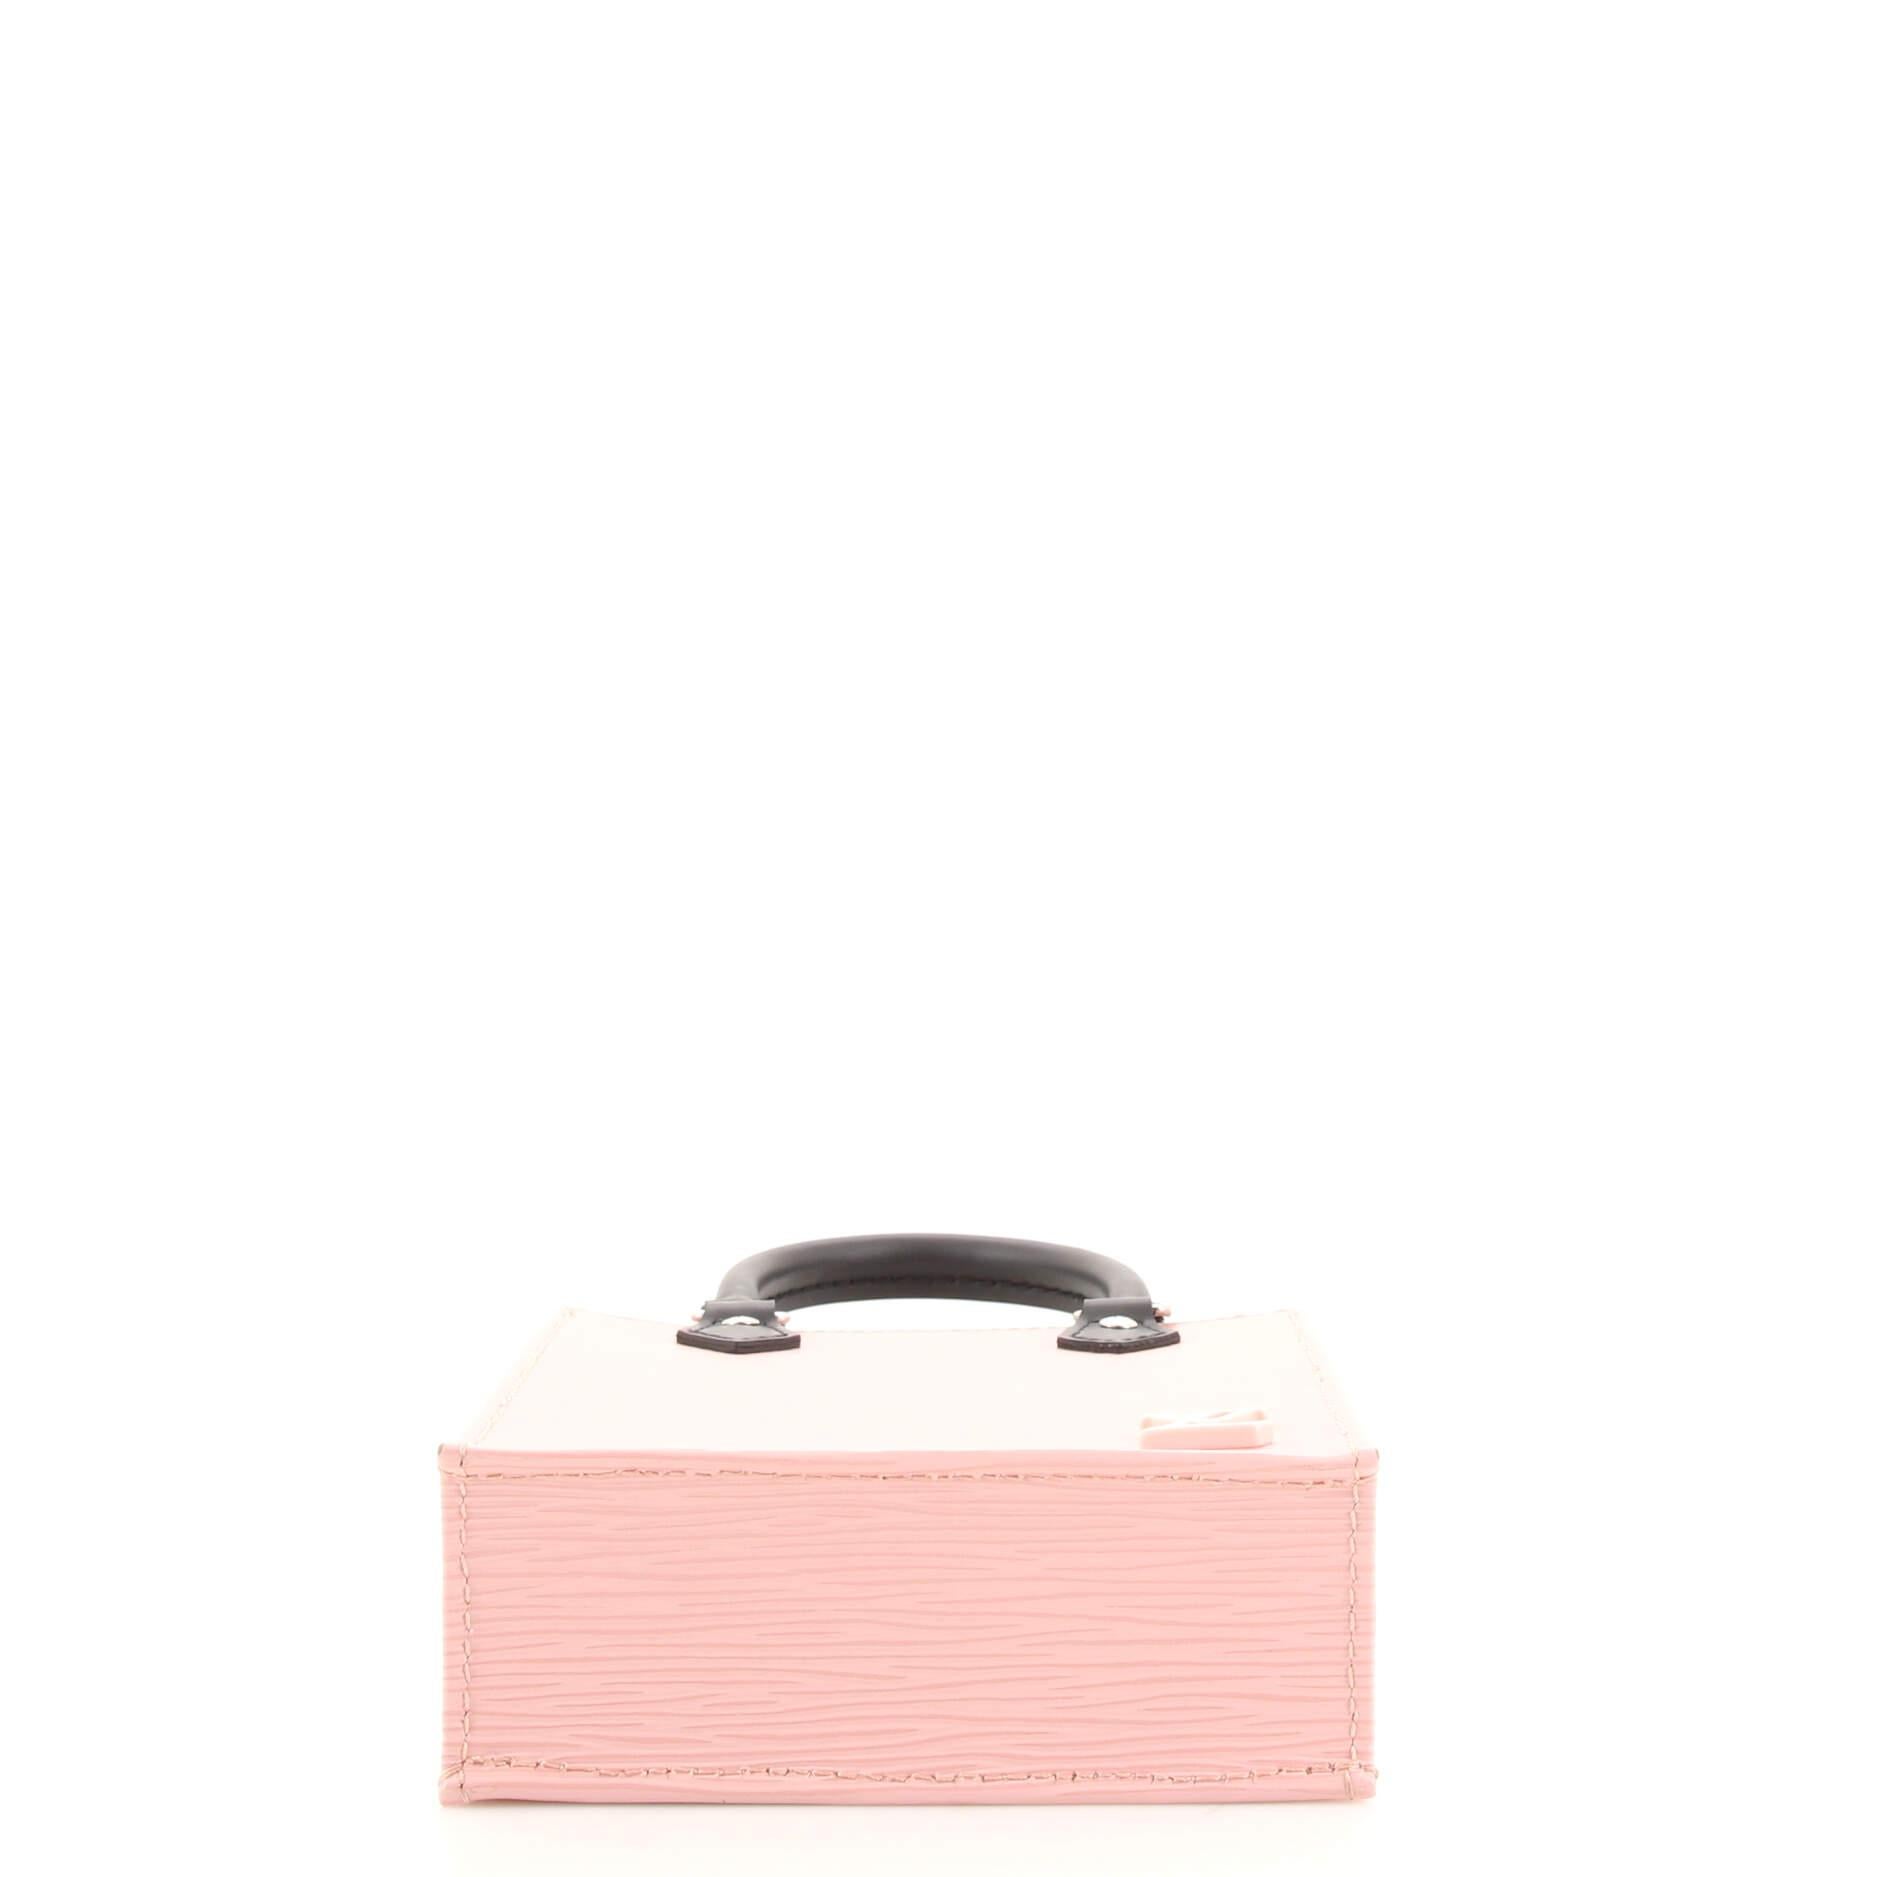 lv light pink bag